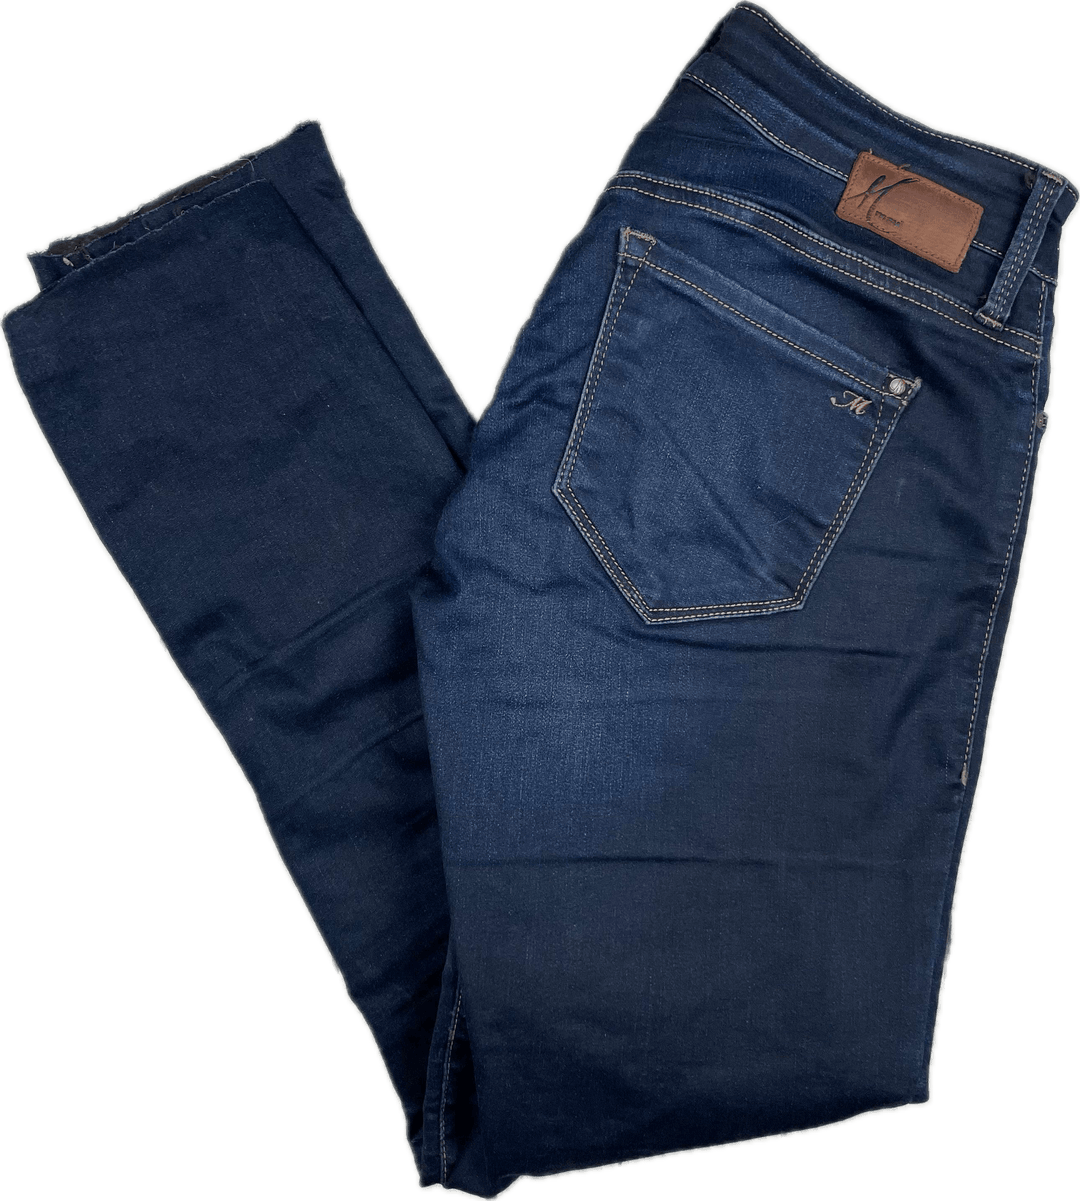 Mavi Jeans 'Alexa' Mid Rise Skinny Denim Jeans -Size 26 or 8AU - Jean Pool